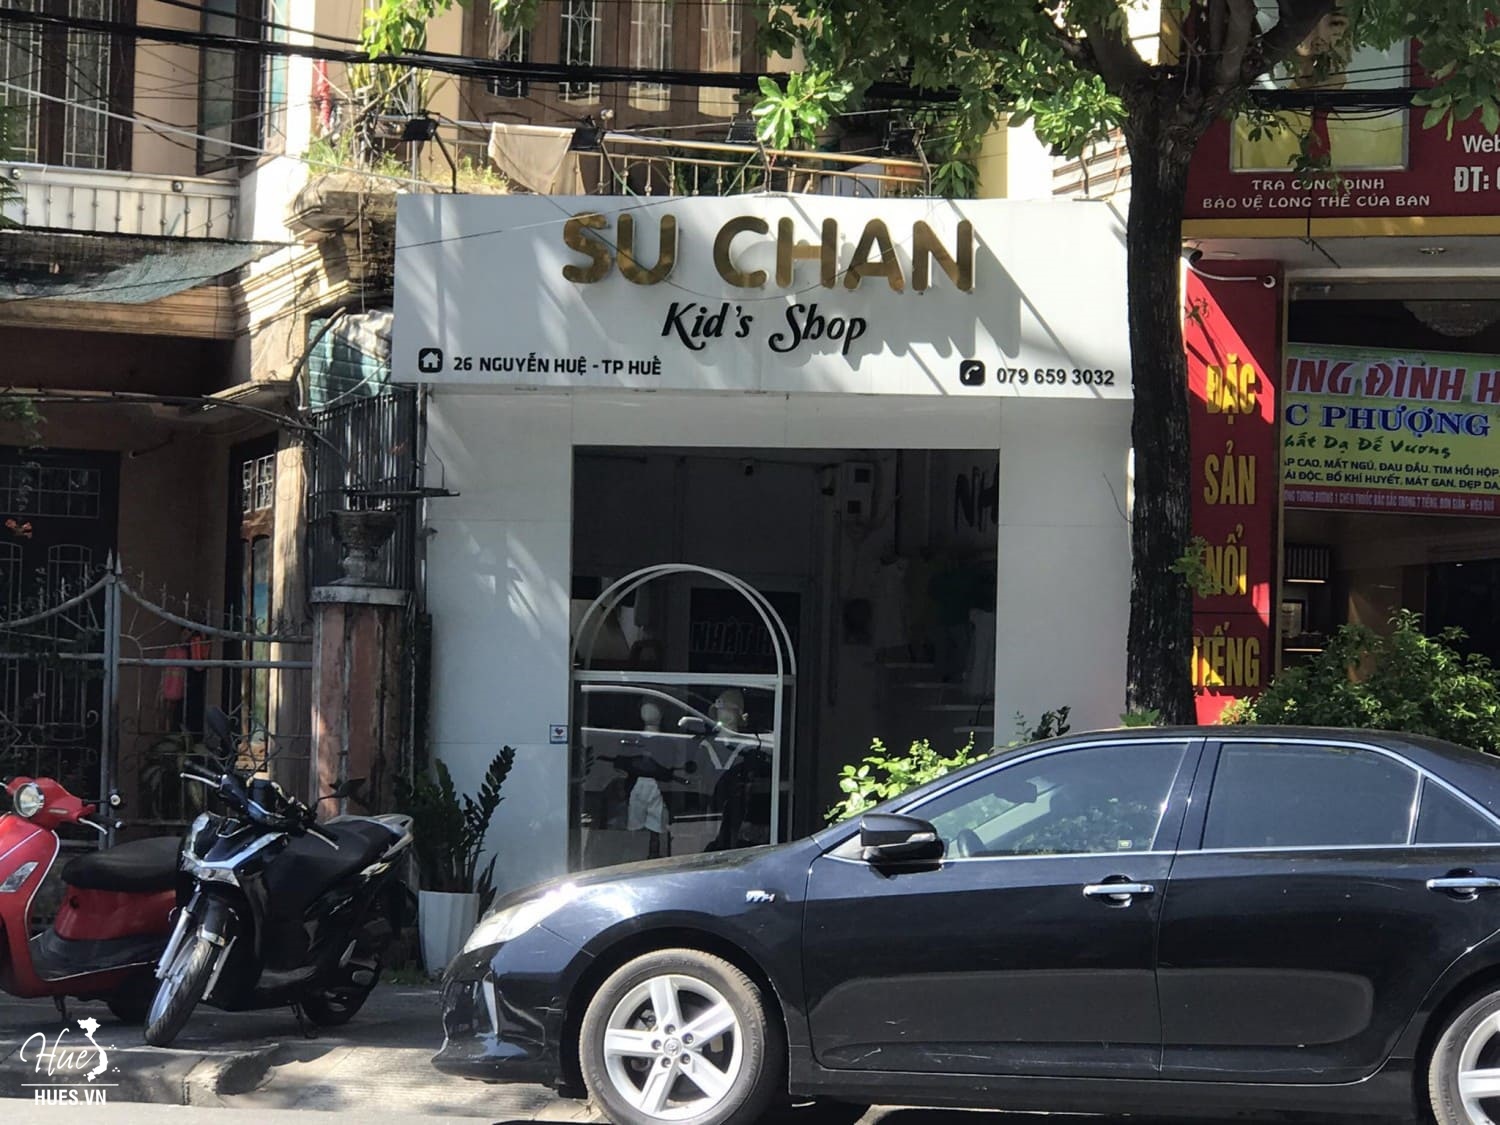 Shop thời trang trẻ em Su Chan